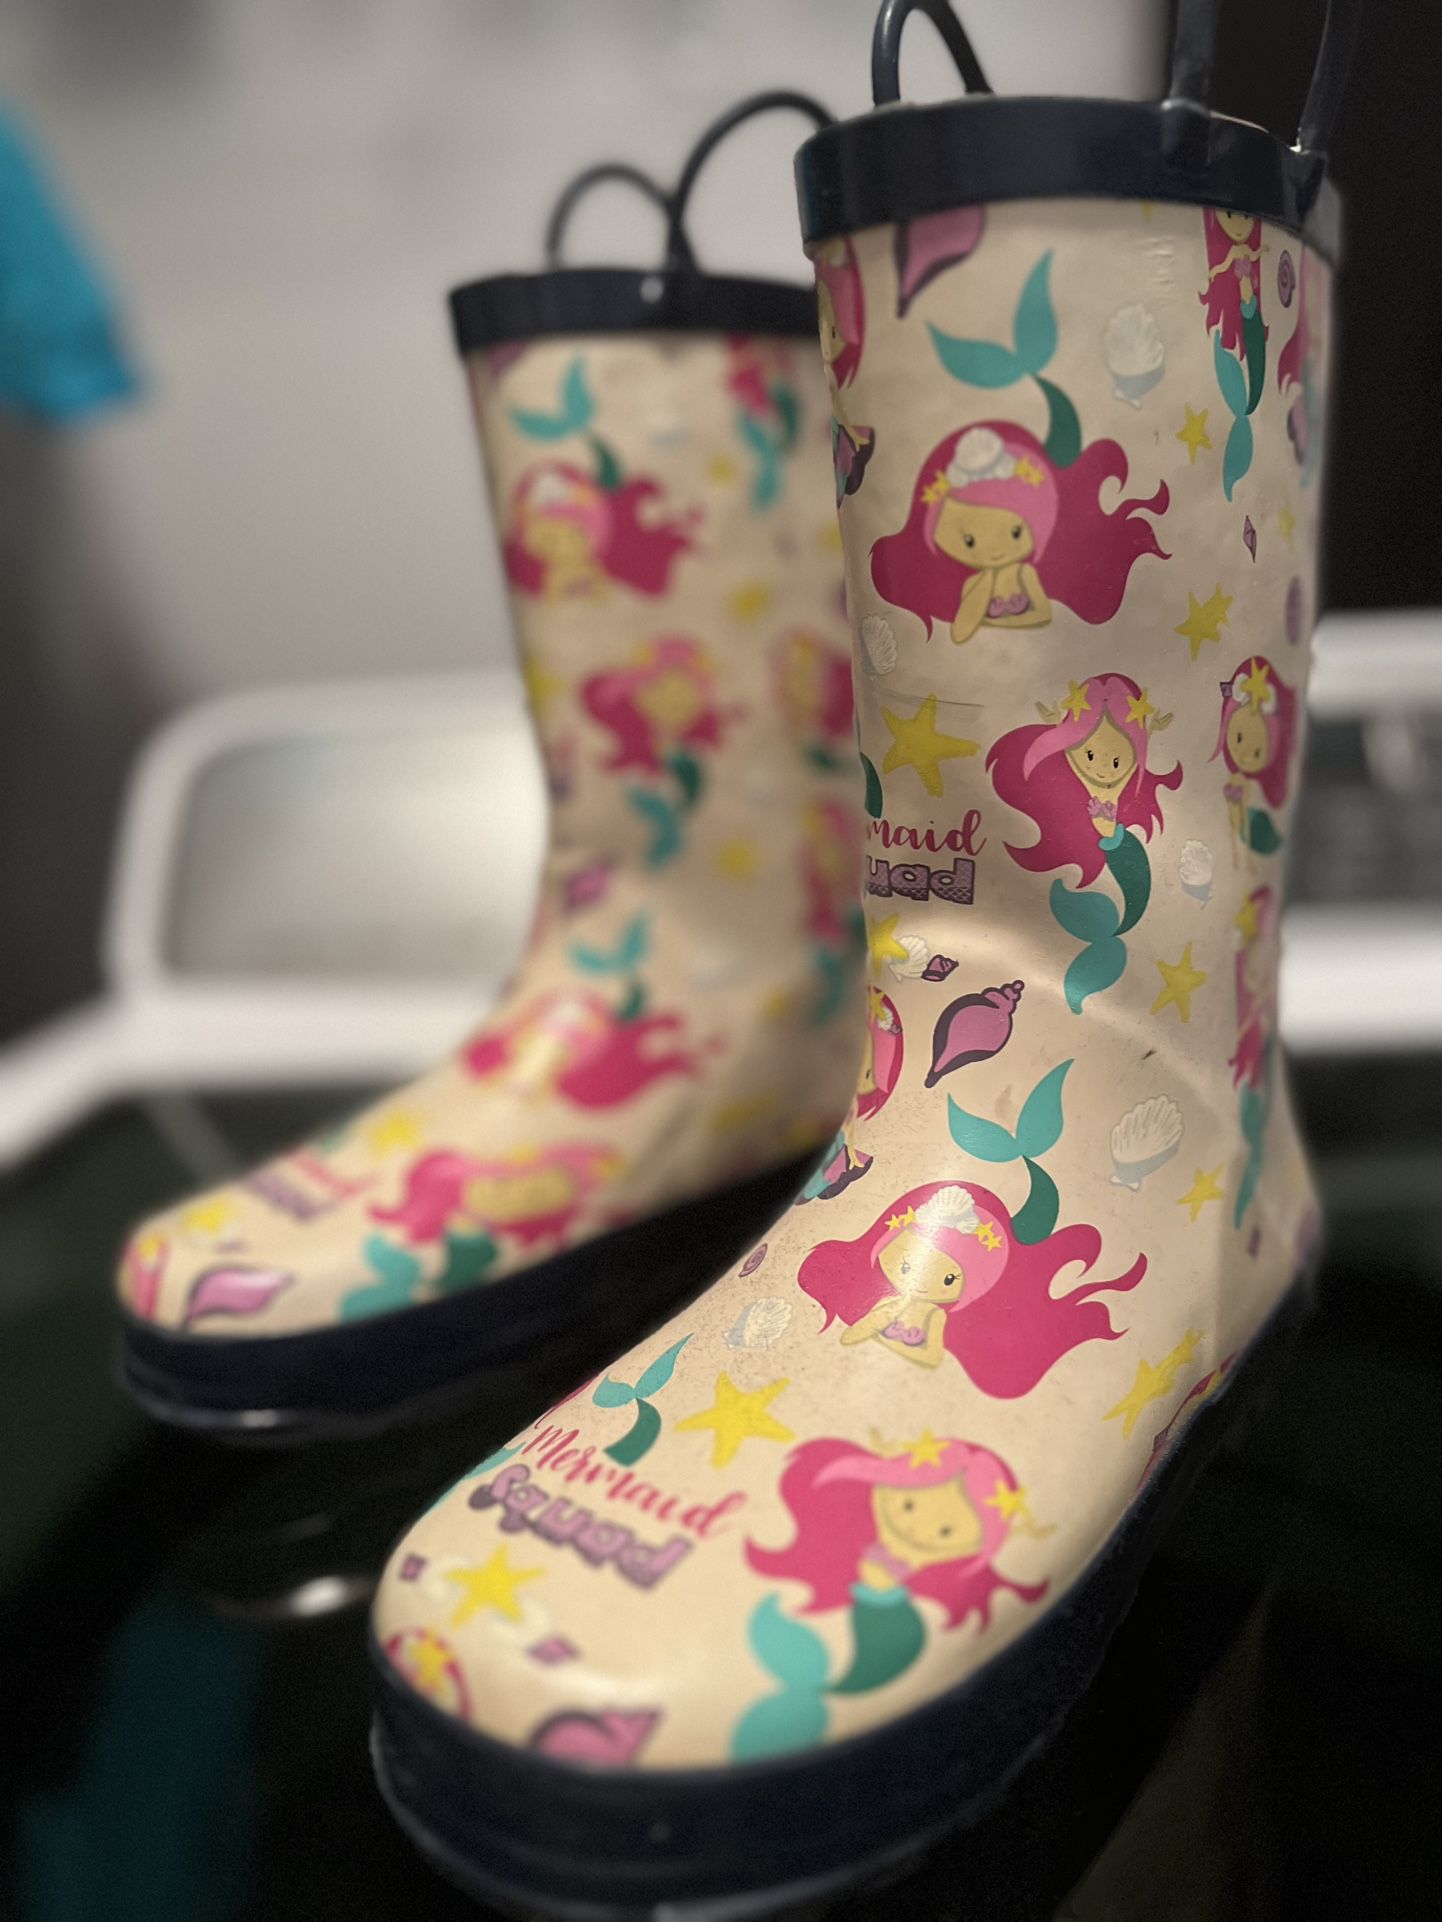 Girls Rain Boots Size 2! Perfect for all this desert rain!